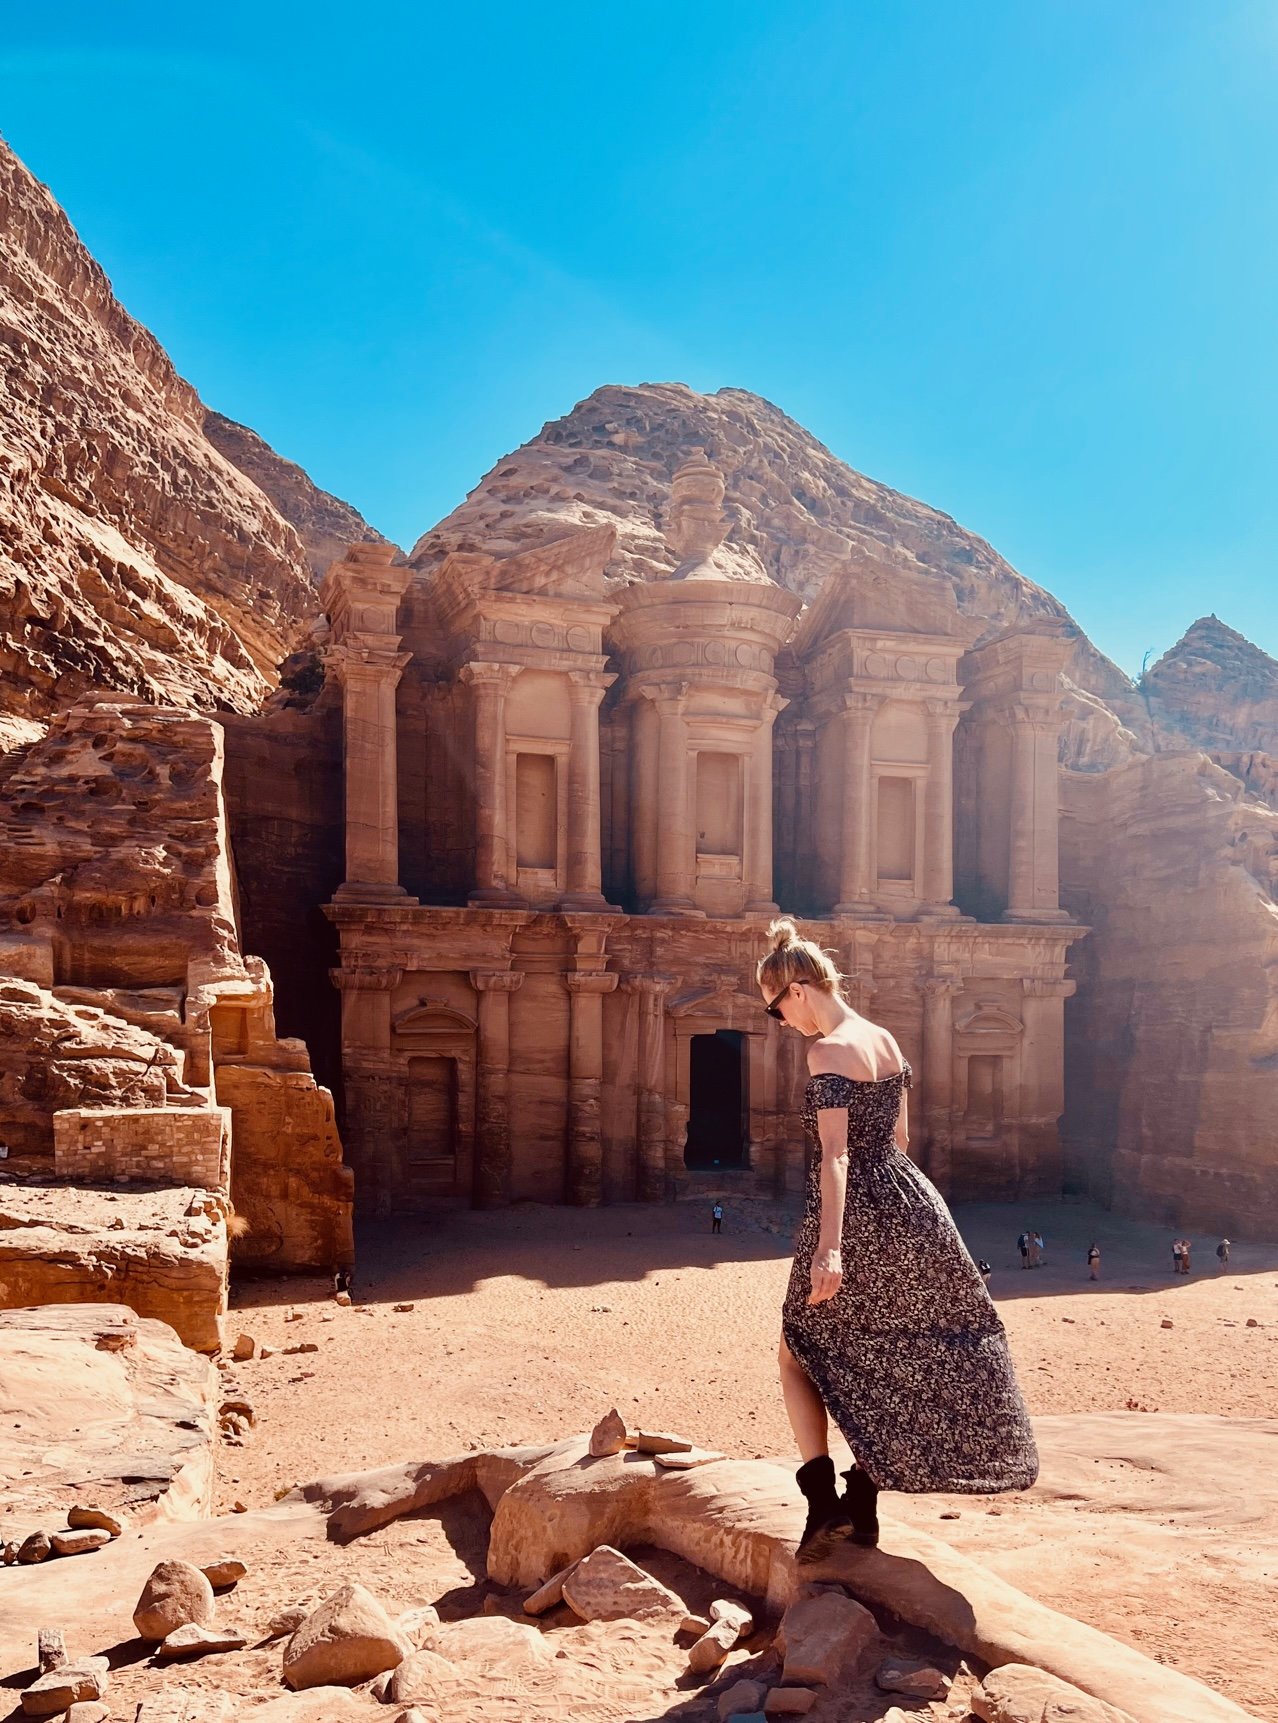 Revisiting a favorite spot in Petra, Jordan